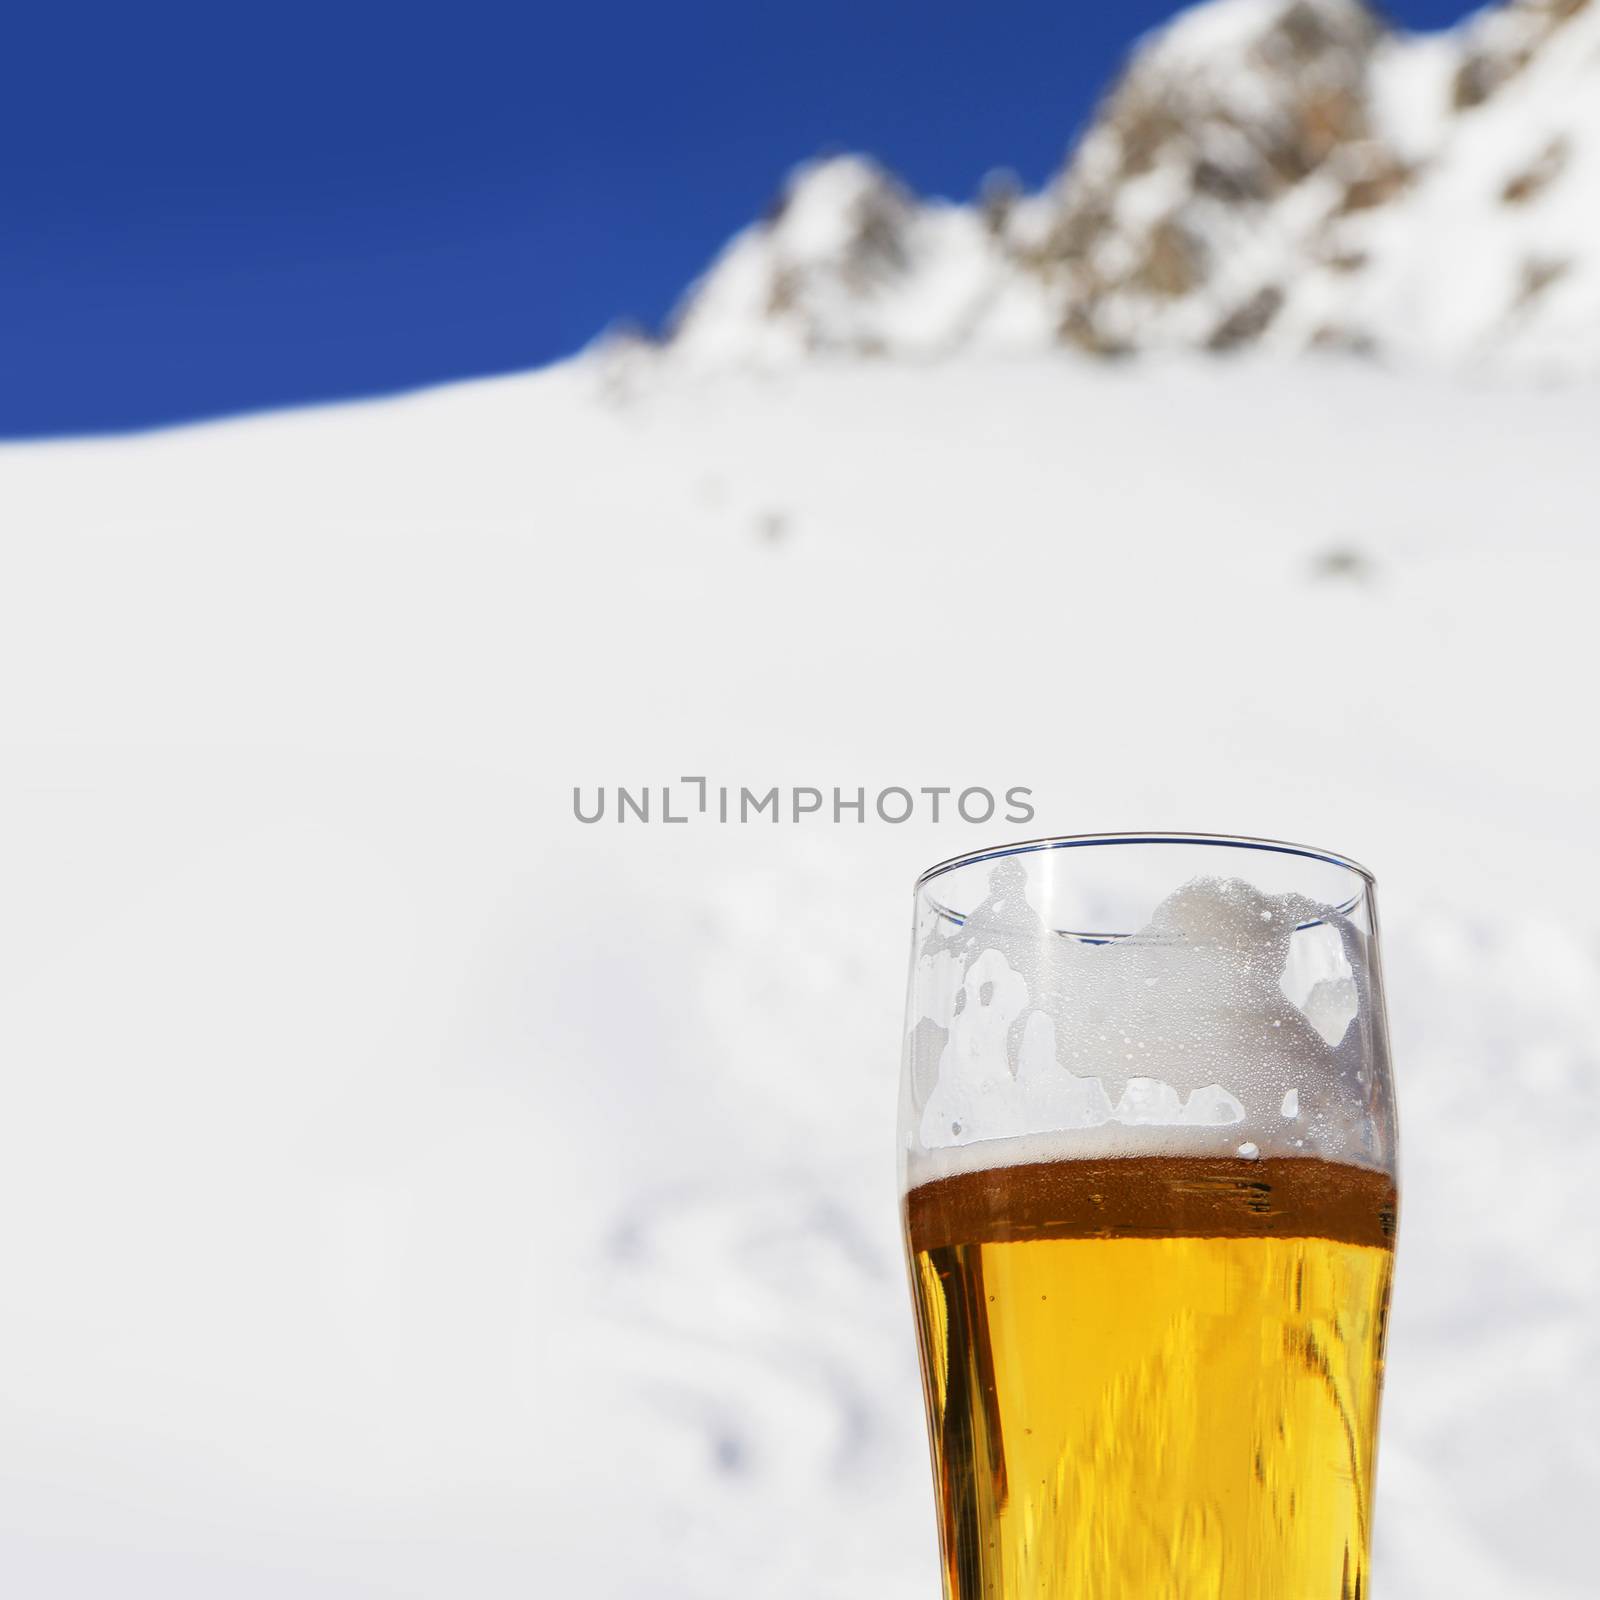 Beer in winter mountains by destillat